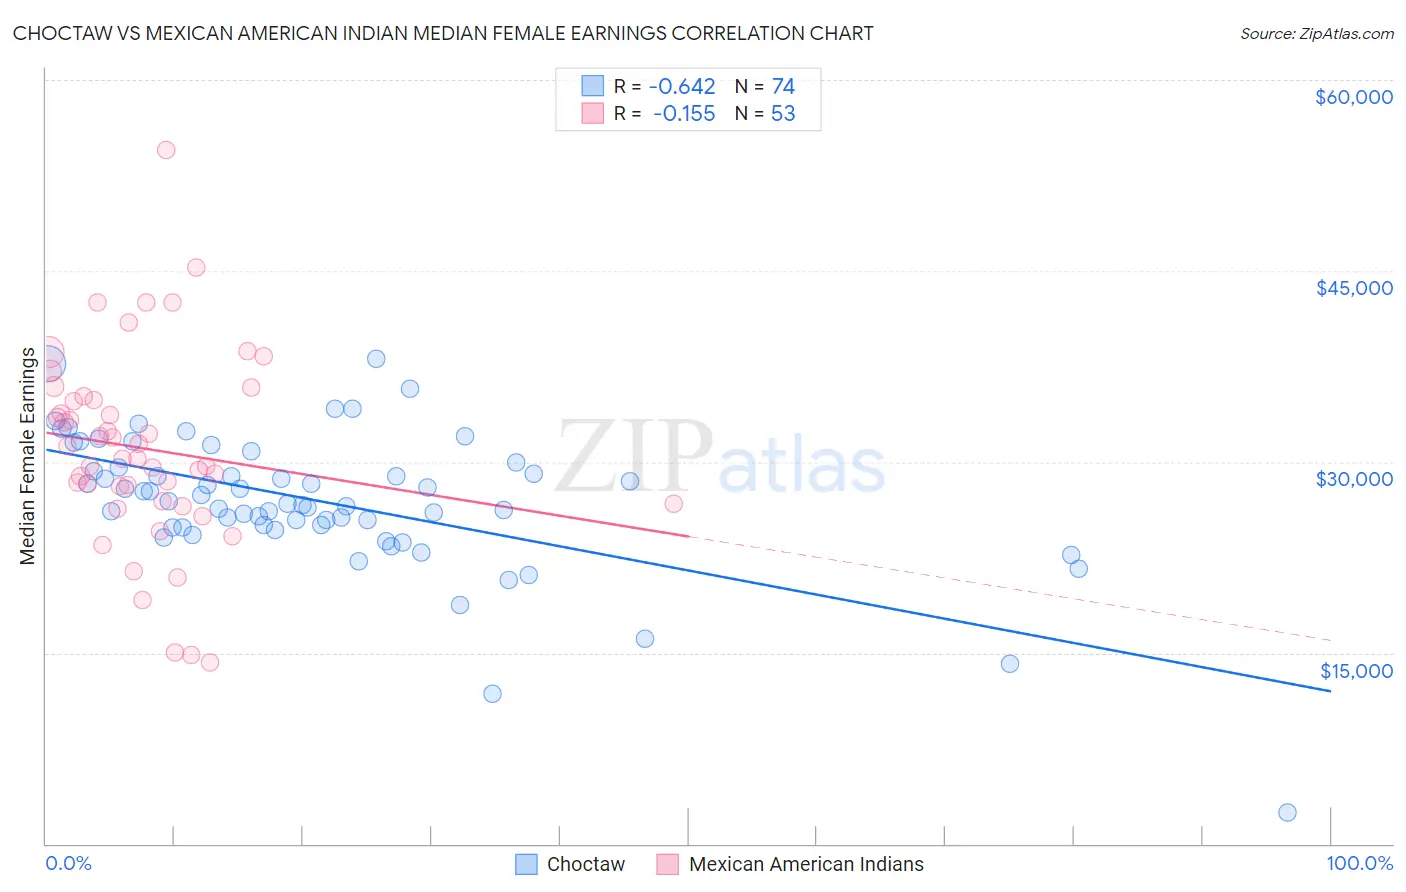 Choctaw vs Mexican American Indian Median Female Earnings